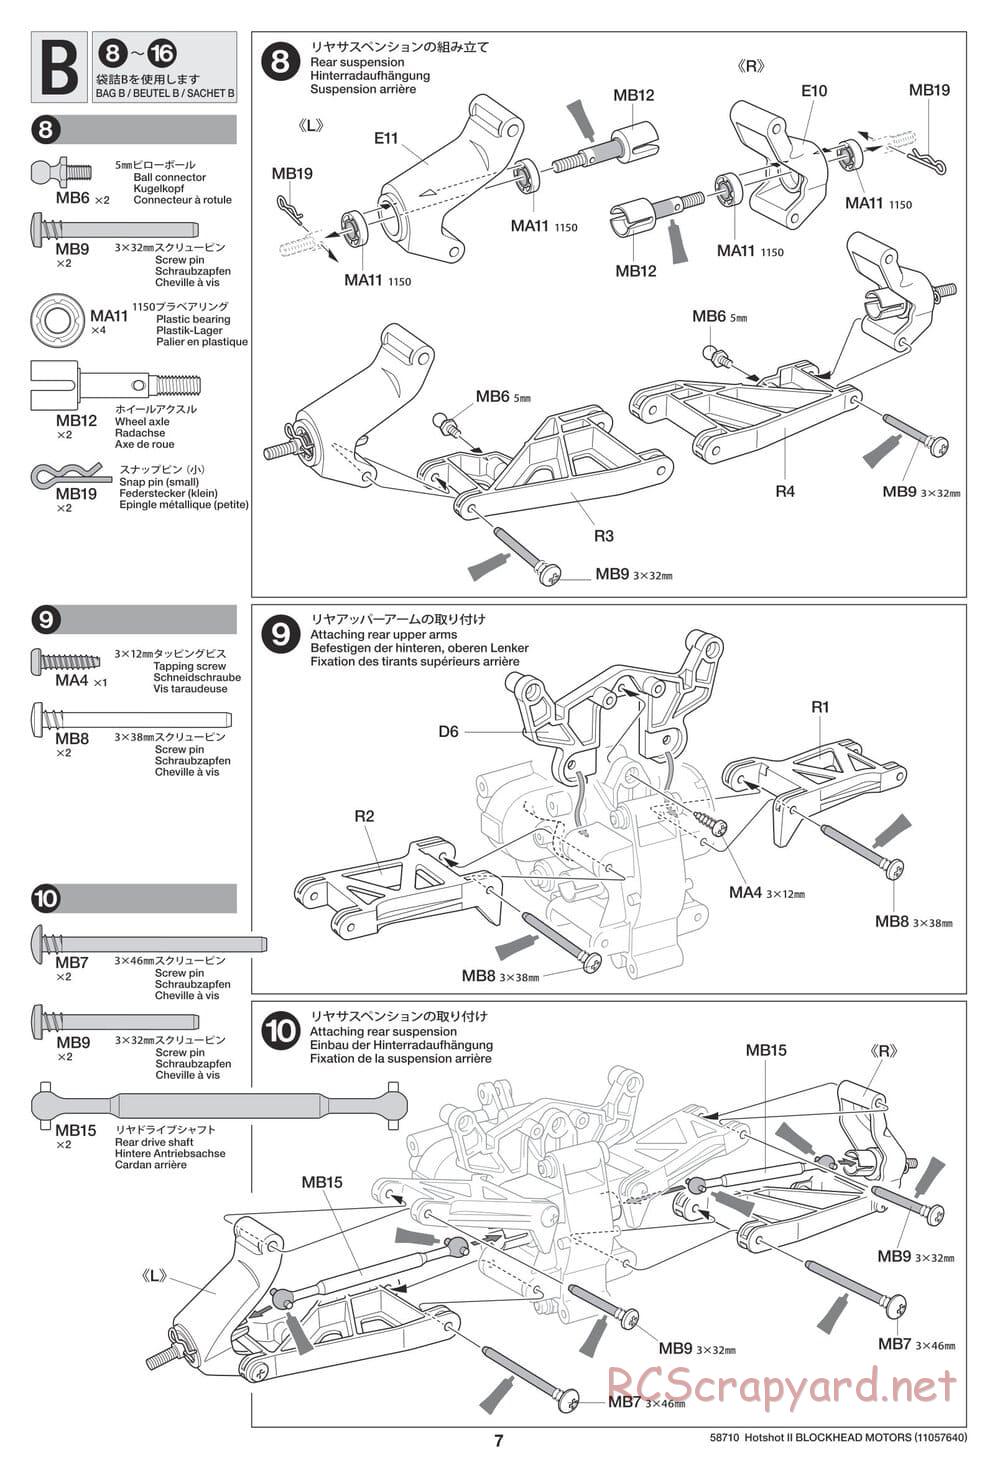 Tamiya - Hotshot II Blockhead Motors - HS Chassis - Manual - Page 7